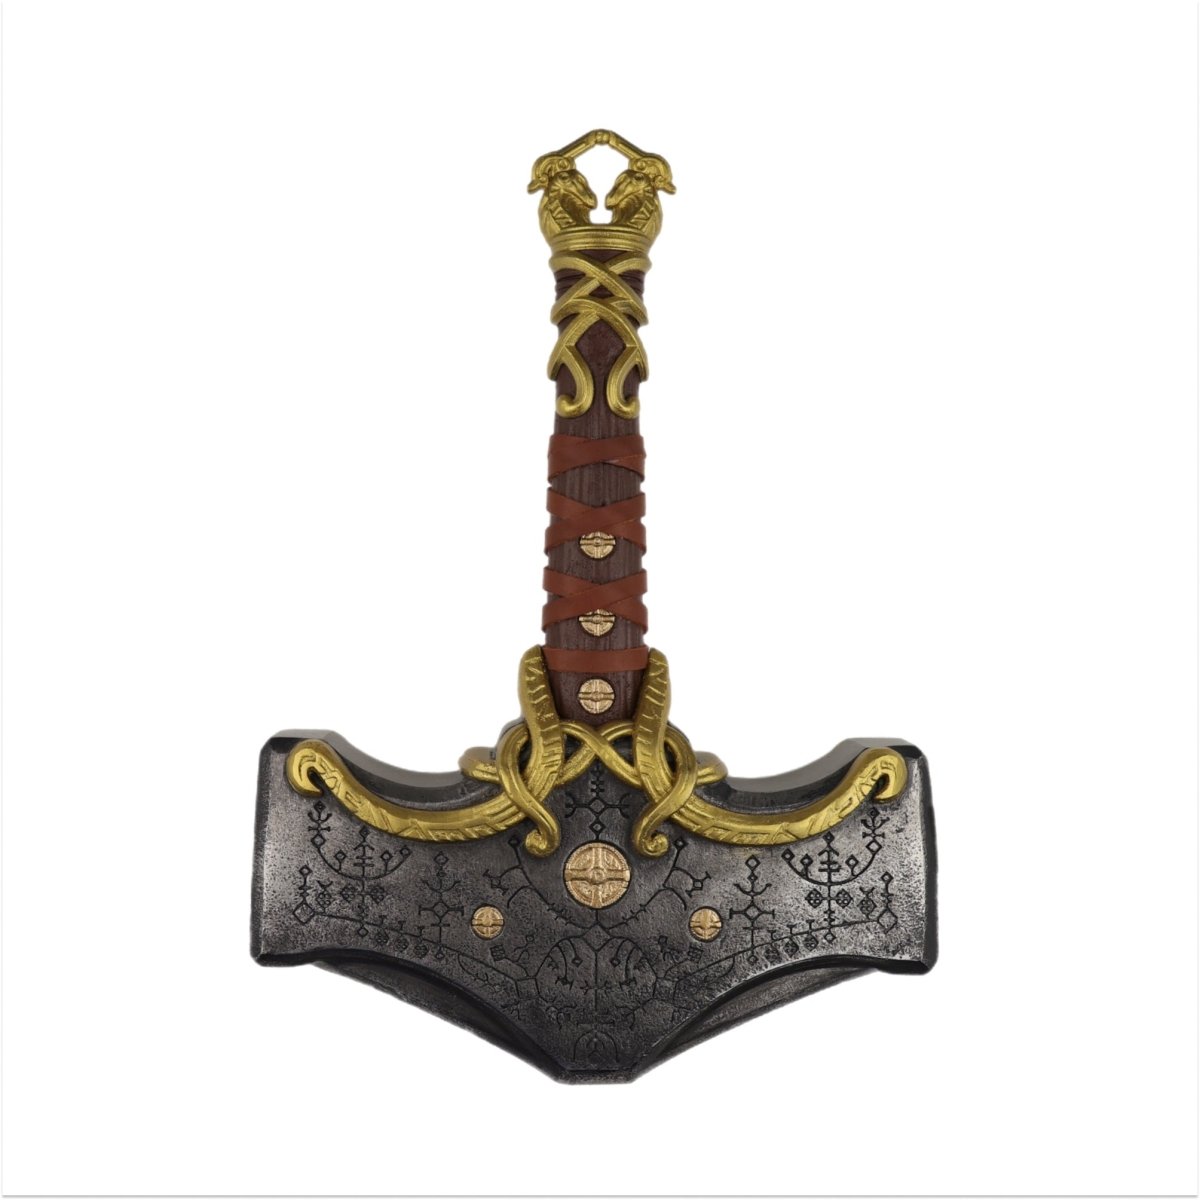 God of War Mjolnir hammer steel version 26.45lb and Luminescent runes from AncientSmithy